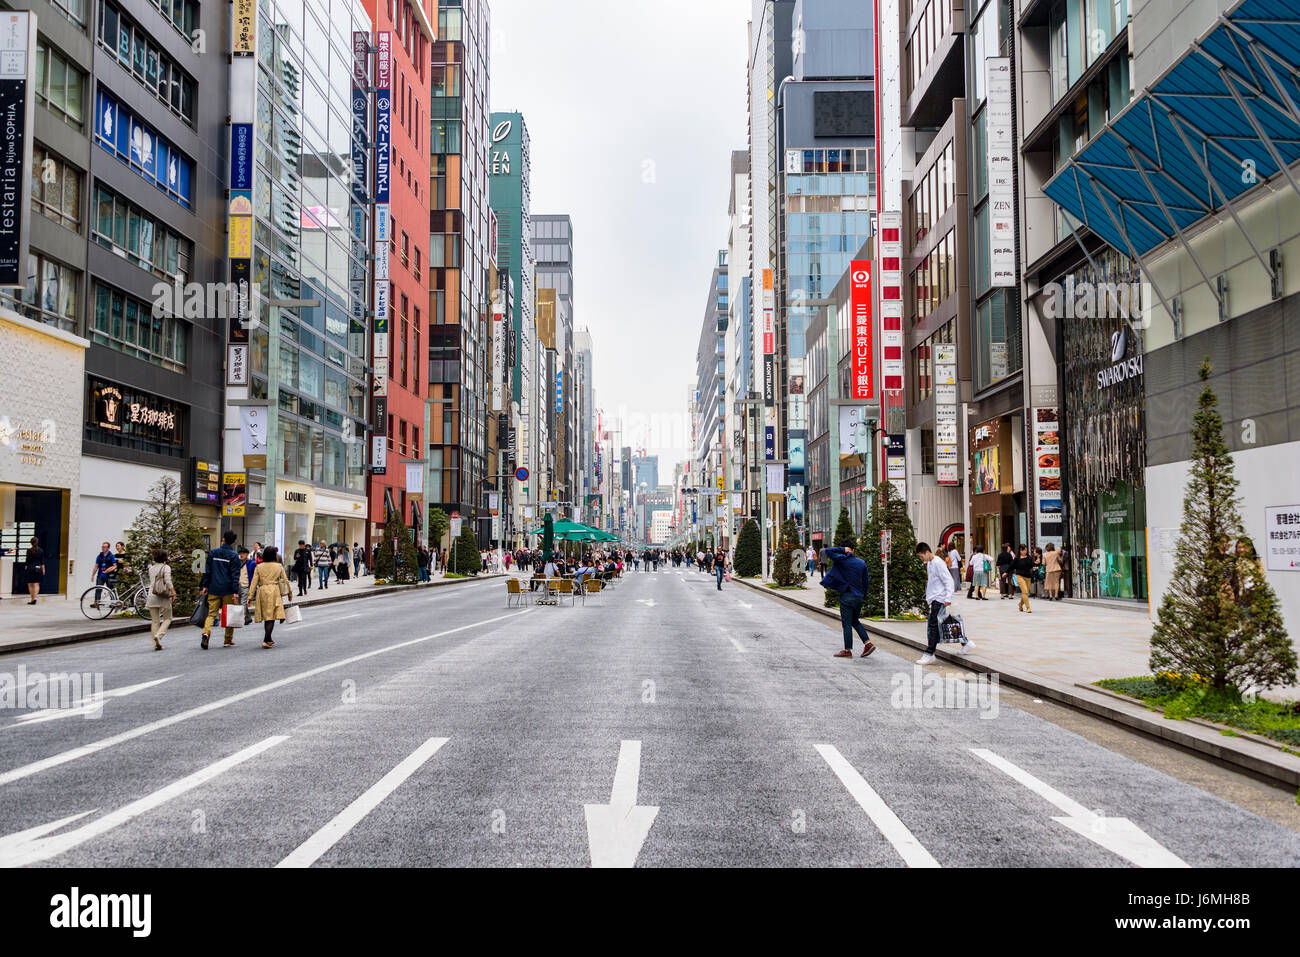 Chuo Dori Street Ginza Pedestrianized Shopping Tokyo Japan Stock Photo Alamy